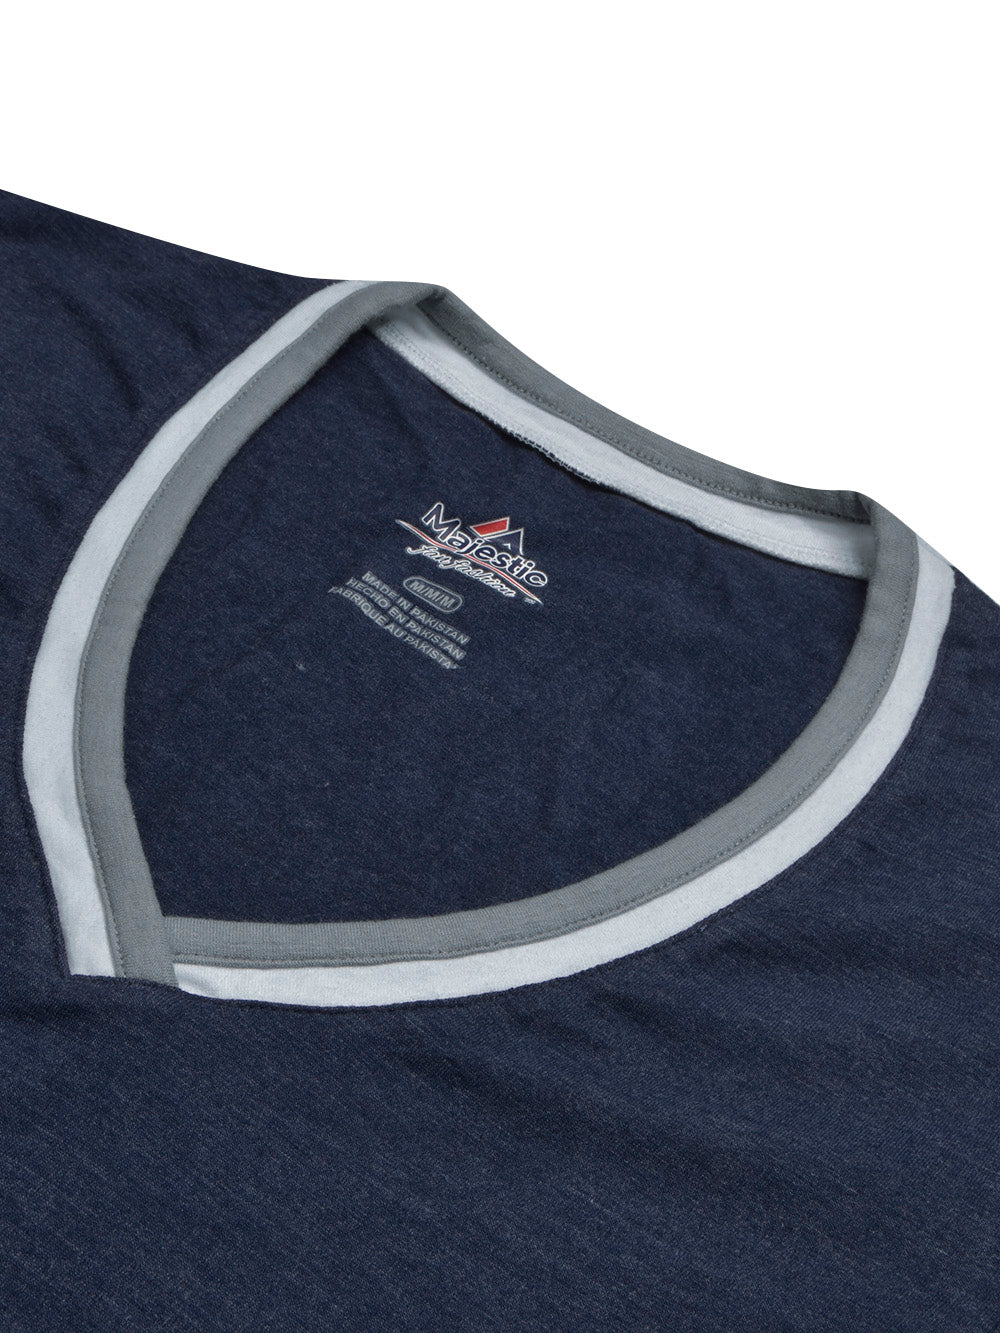 Magestic V Neck Half Sleeve Tee Shirt For Men-Navy Melange-BE1122